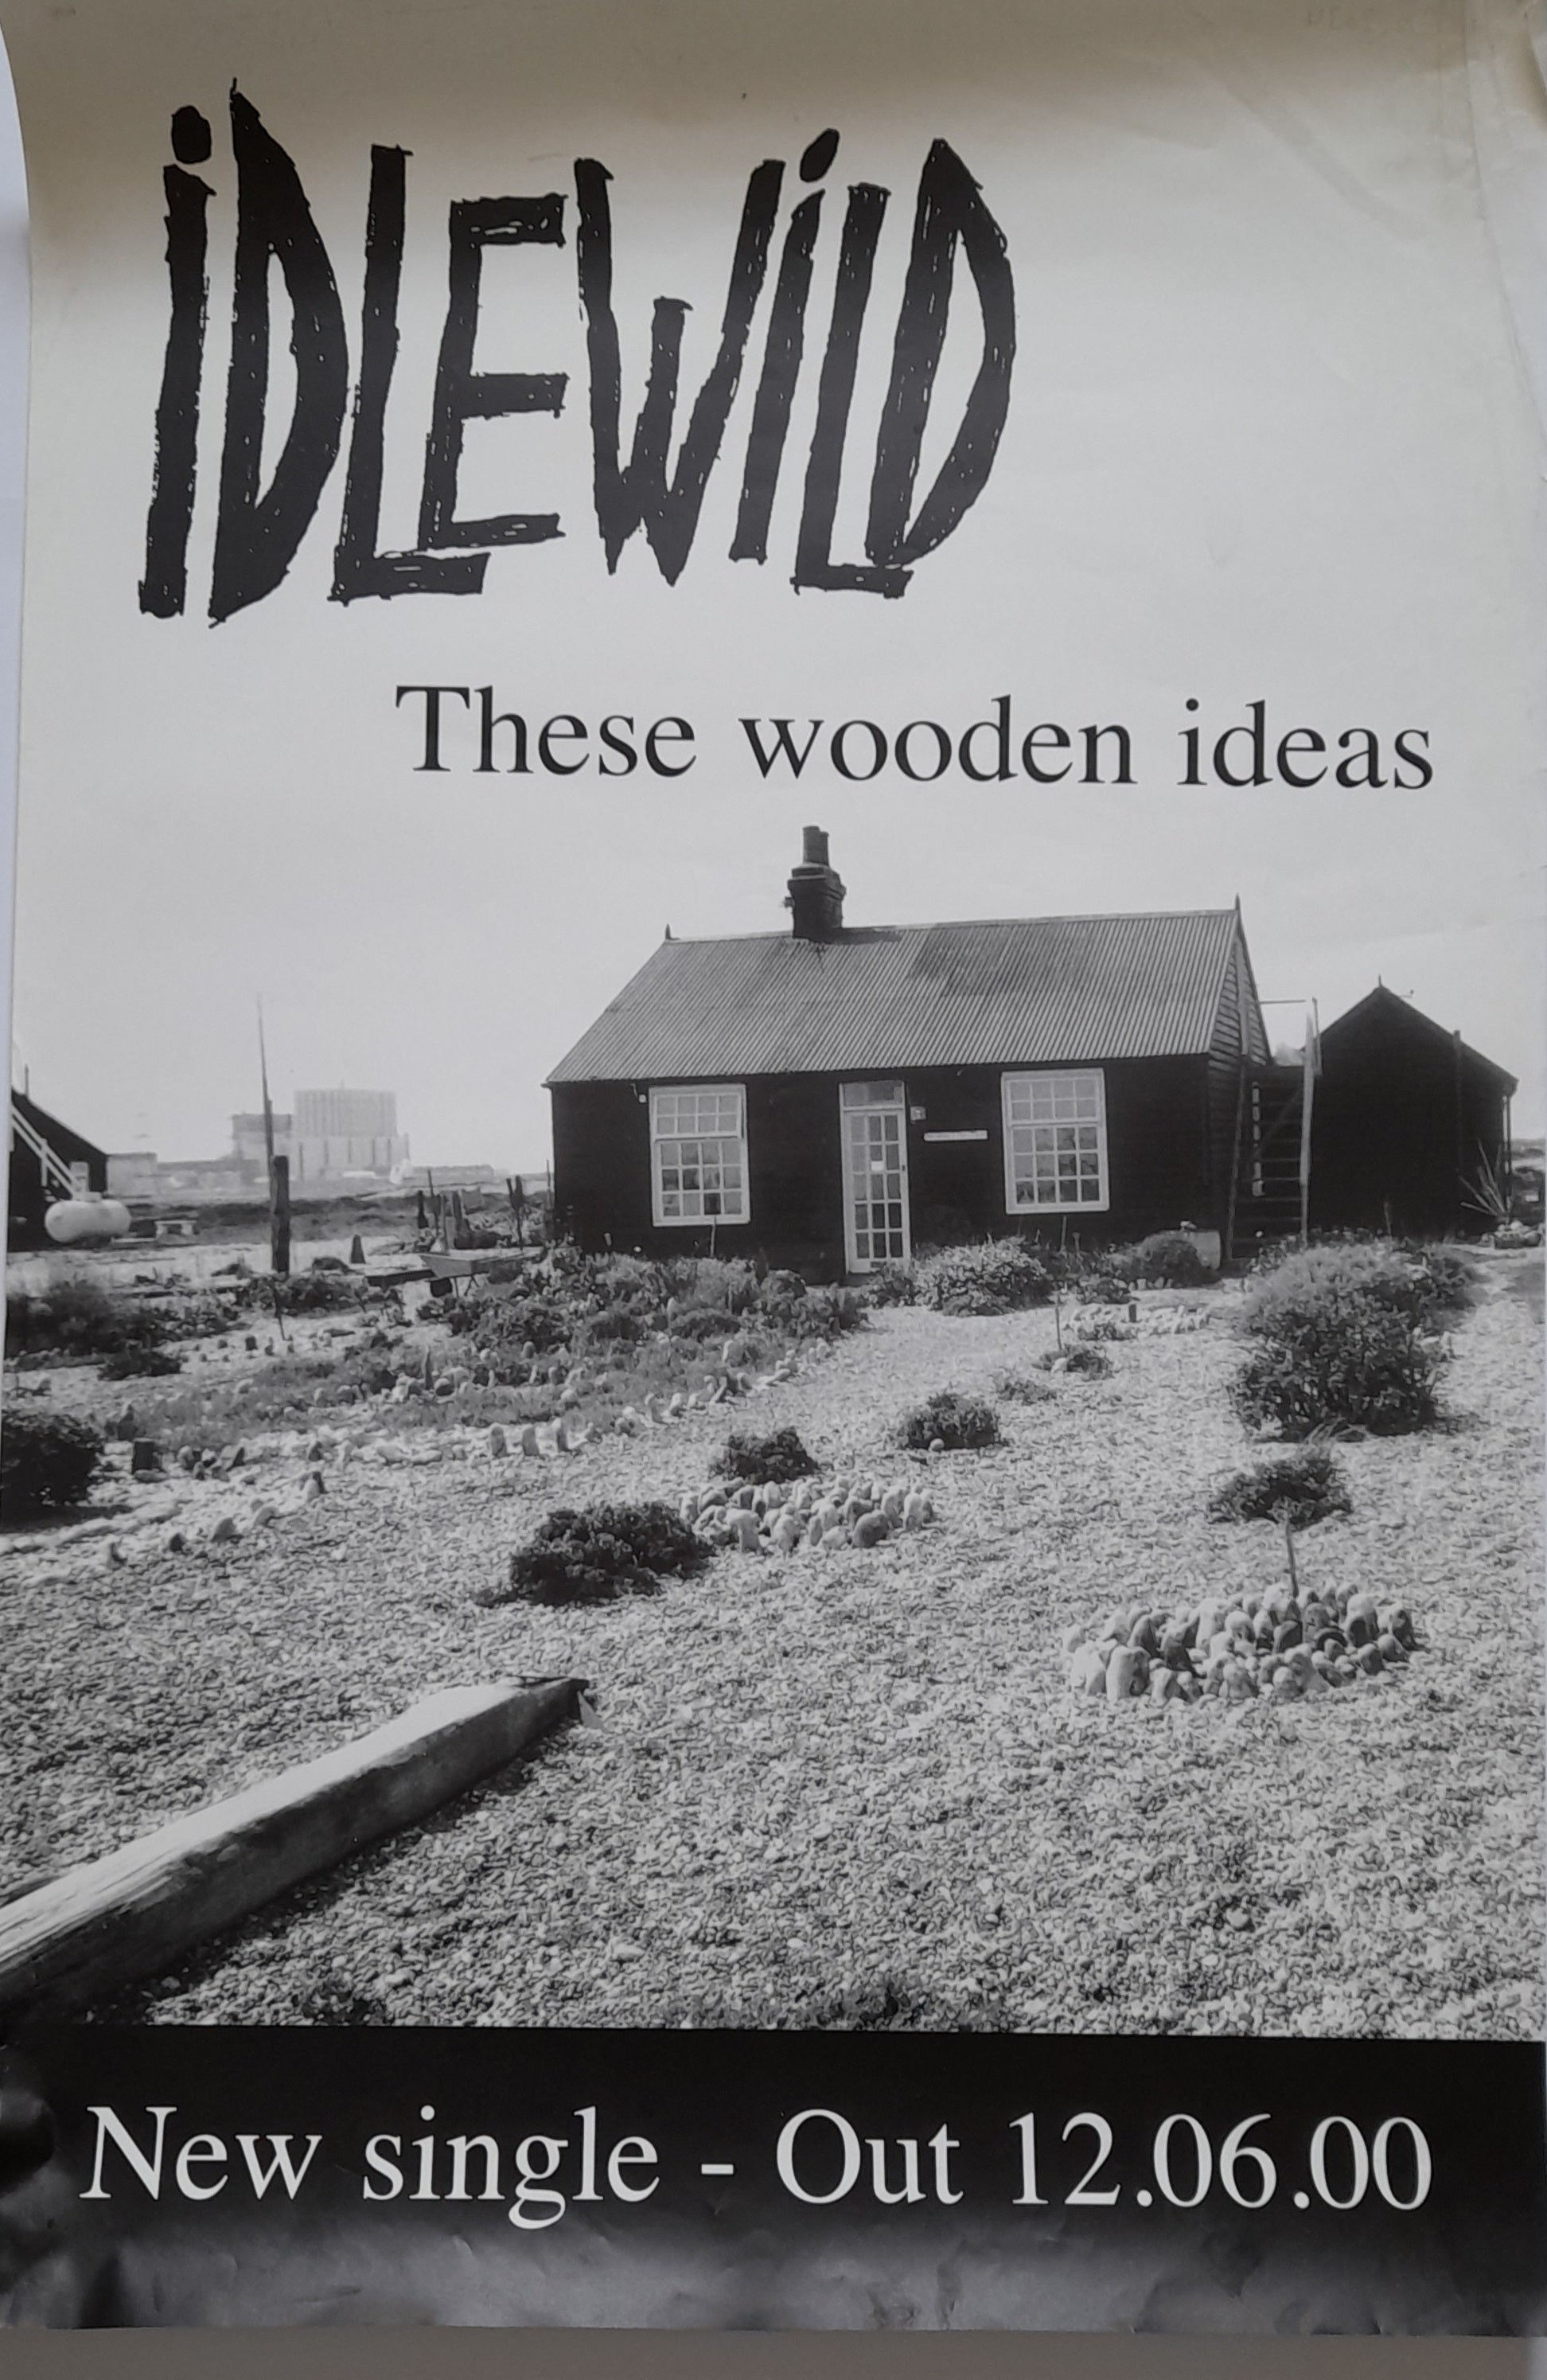 Idlewild These wooden ideas single UK Promotional Poster- RewindPressPlay